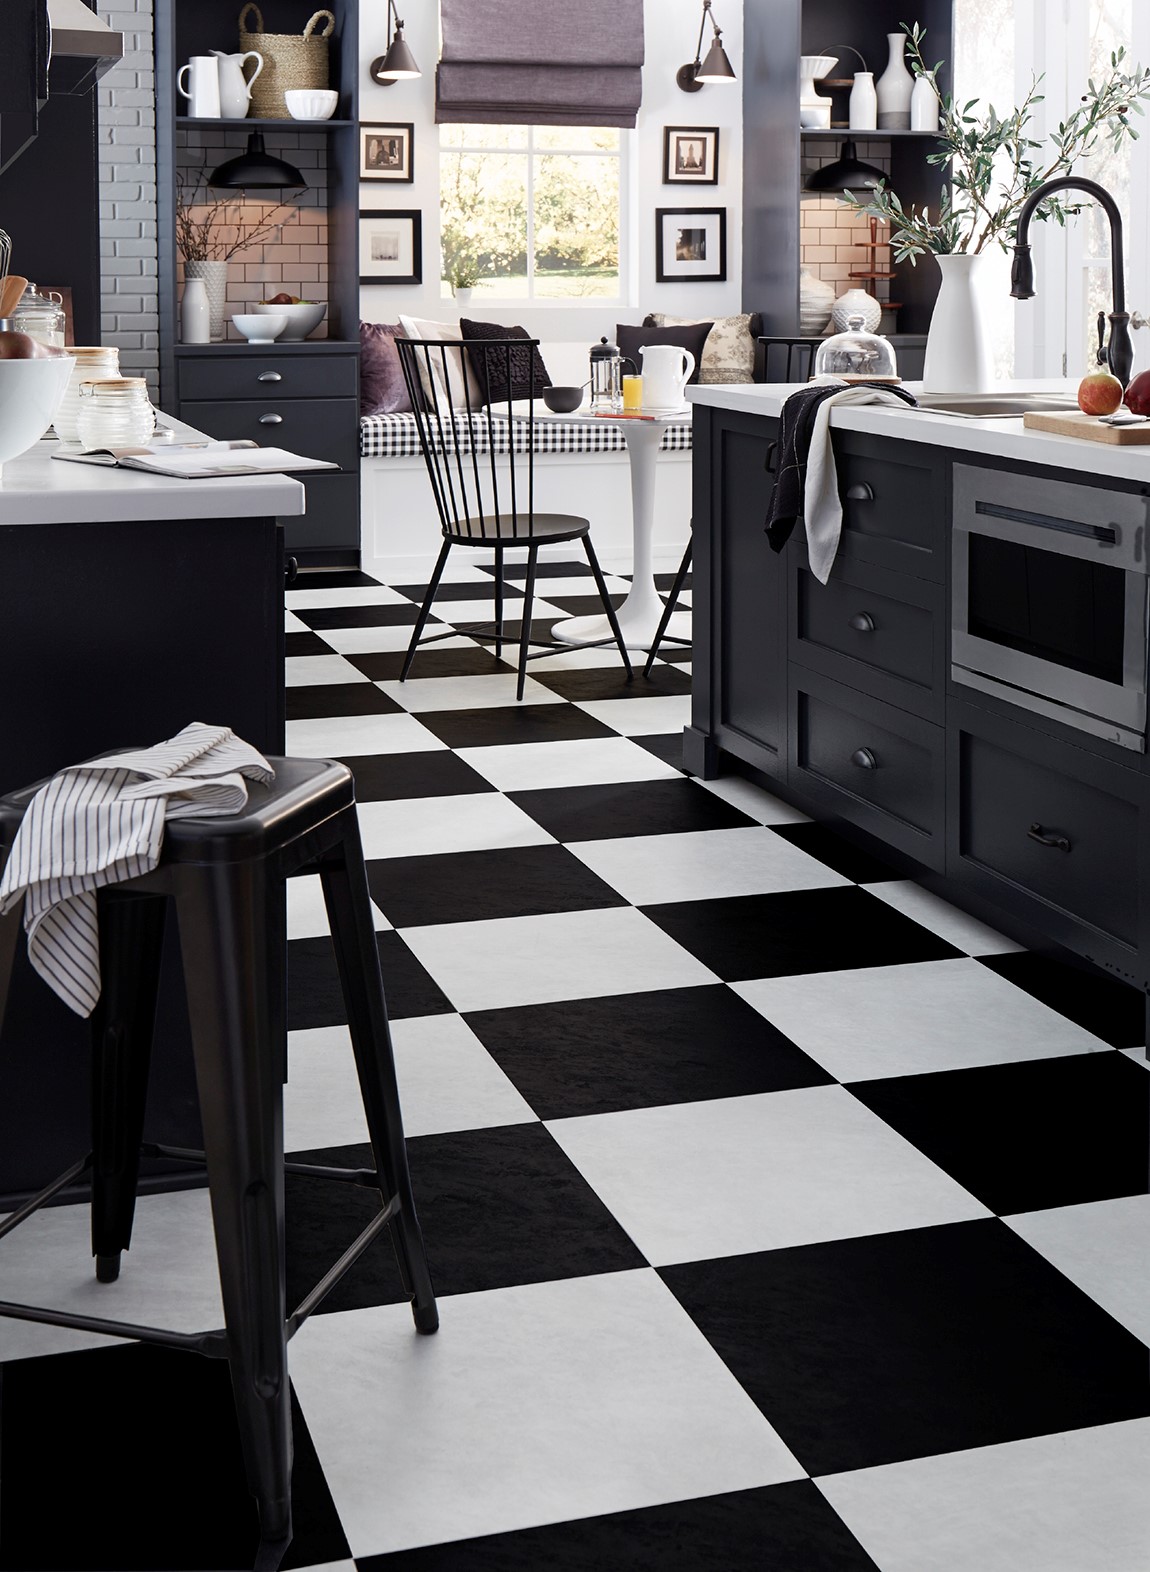 Kitchen Flooring Trends For 2020, Black And White Kitchen Floor Tiles Ideas